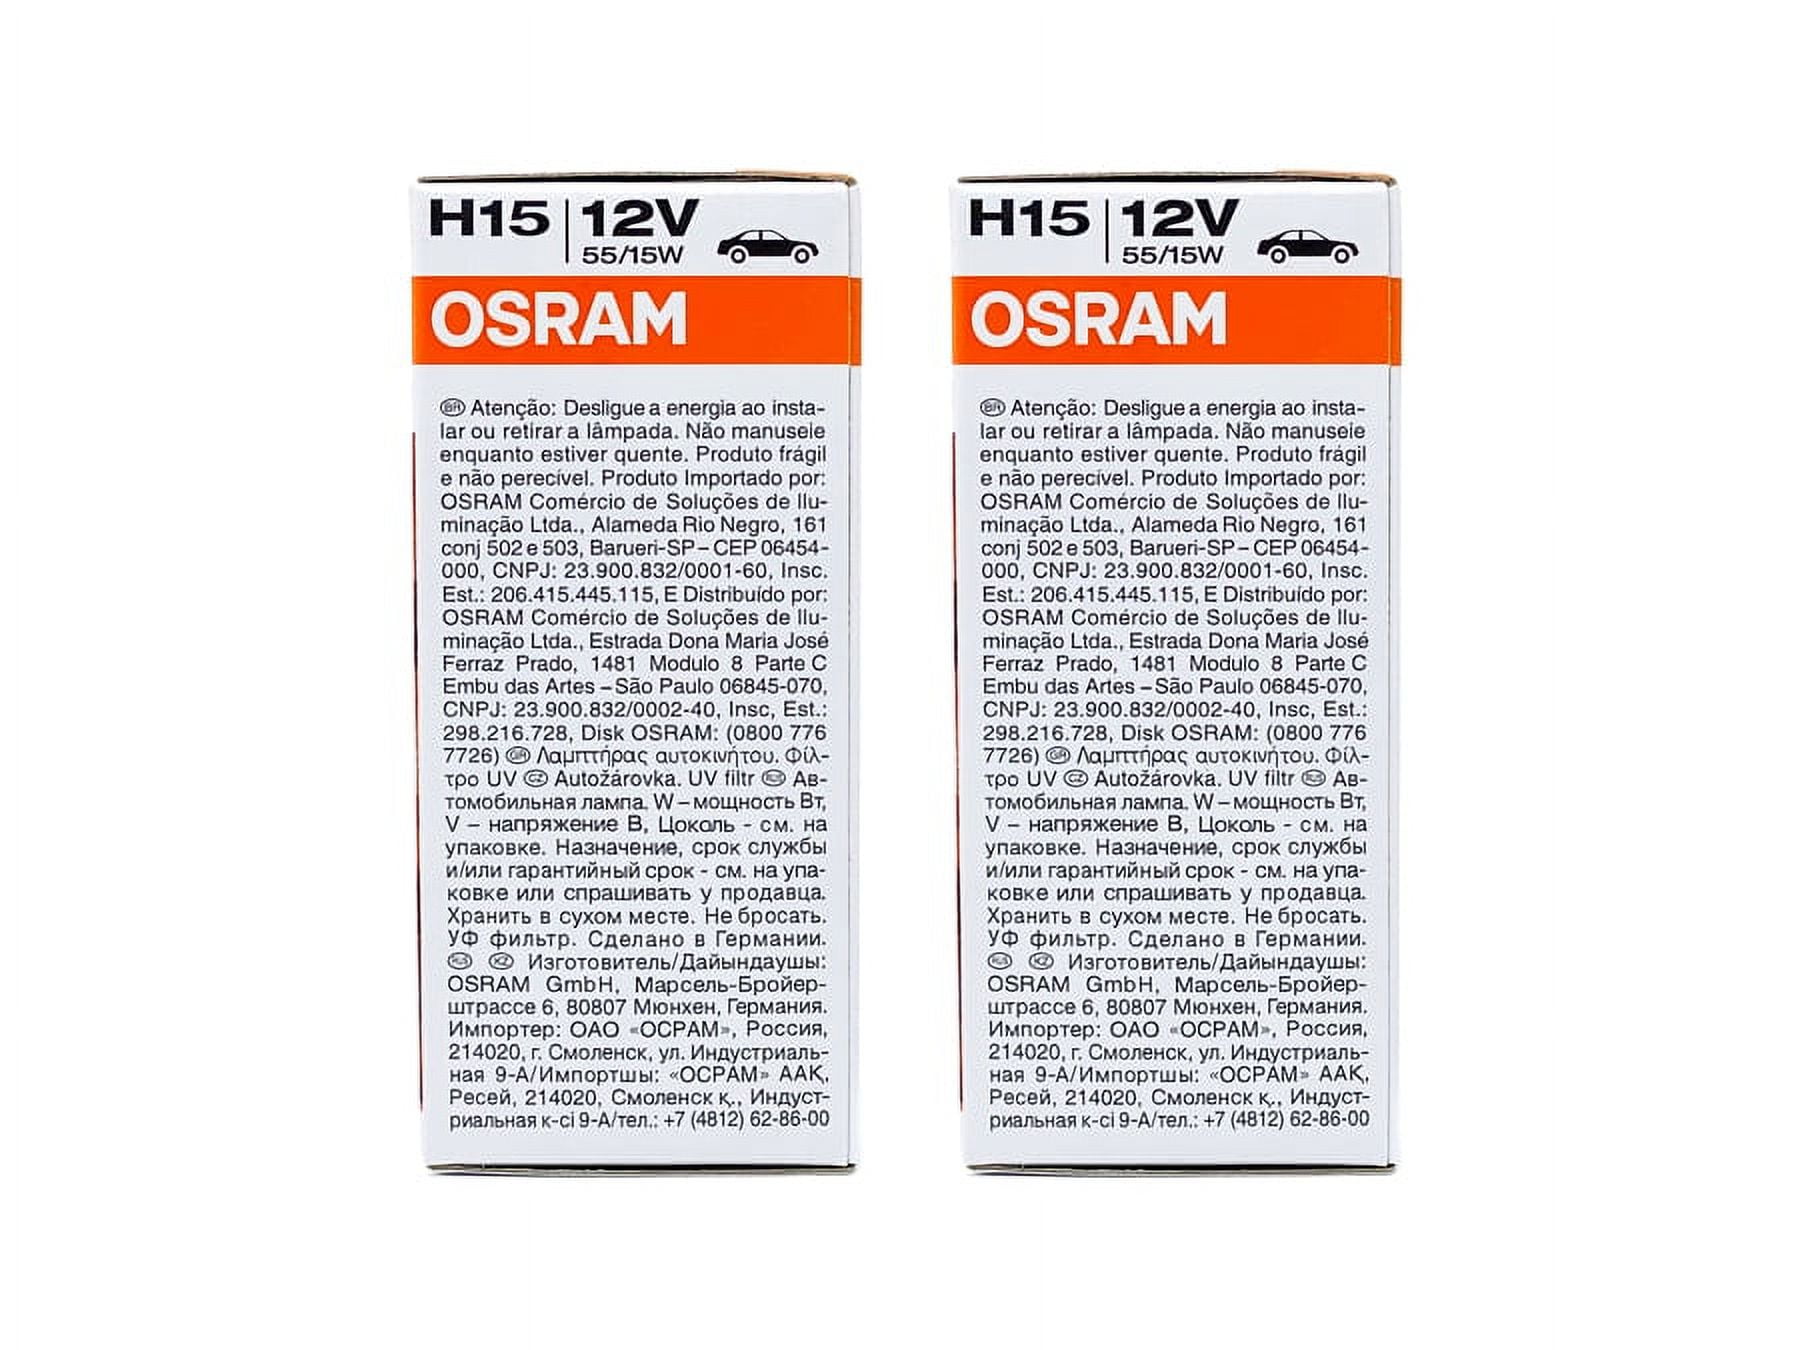 OSRAM H7 Halogen Autolampe 64215, CHF 22,95